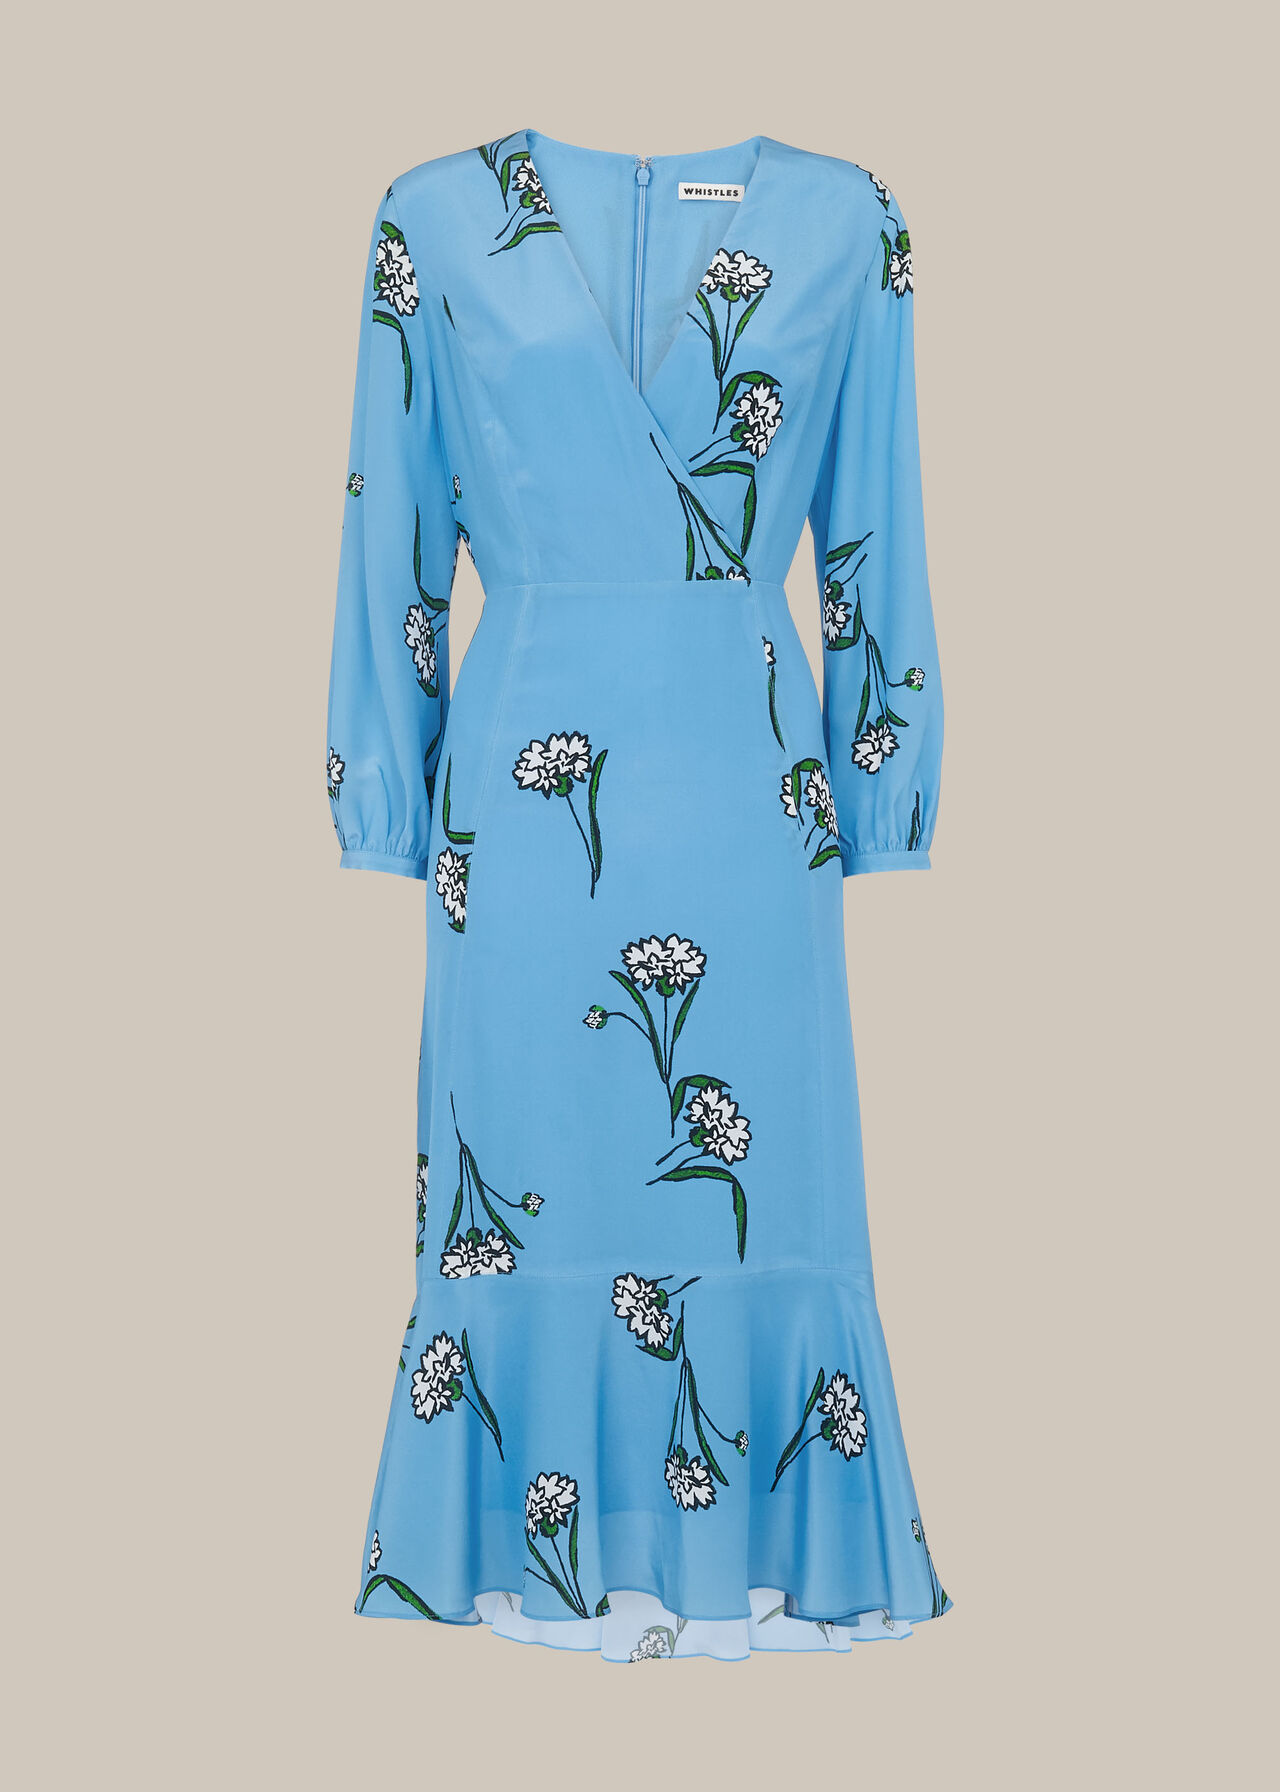 Sprig Flower Silk Dress Blue/Multi